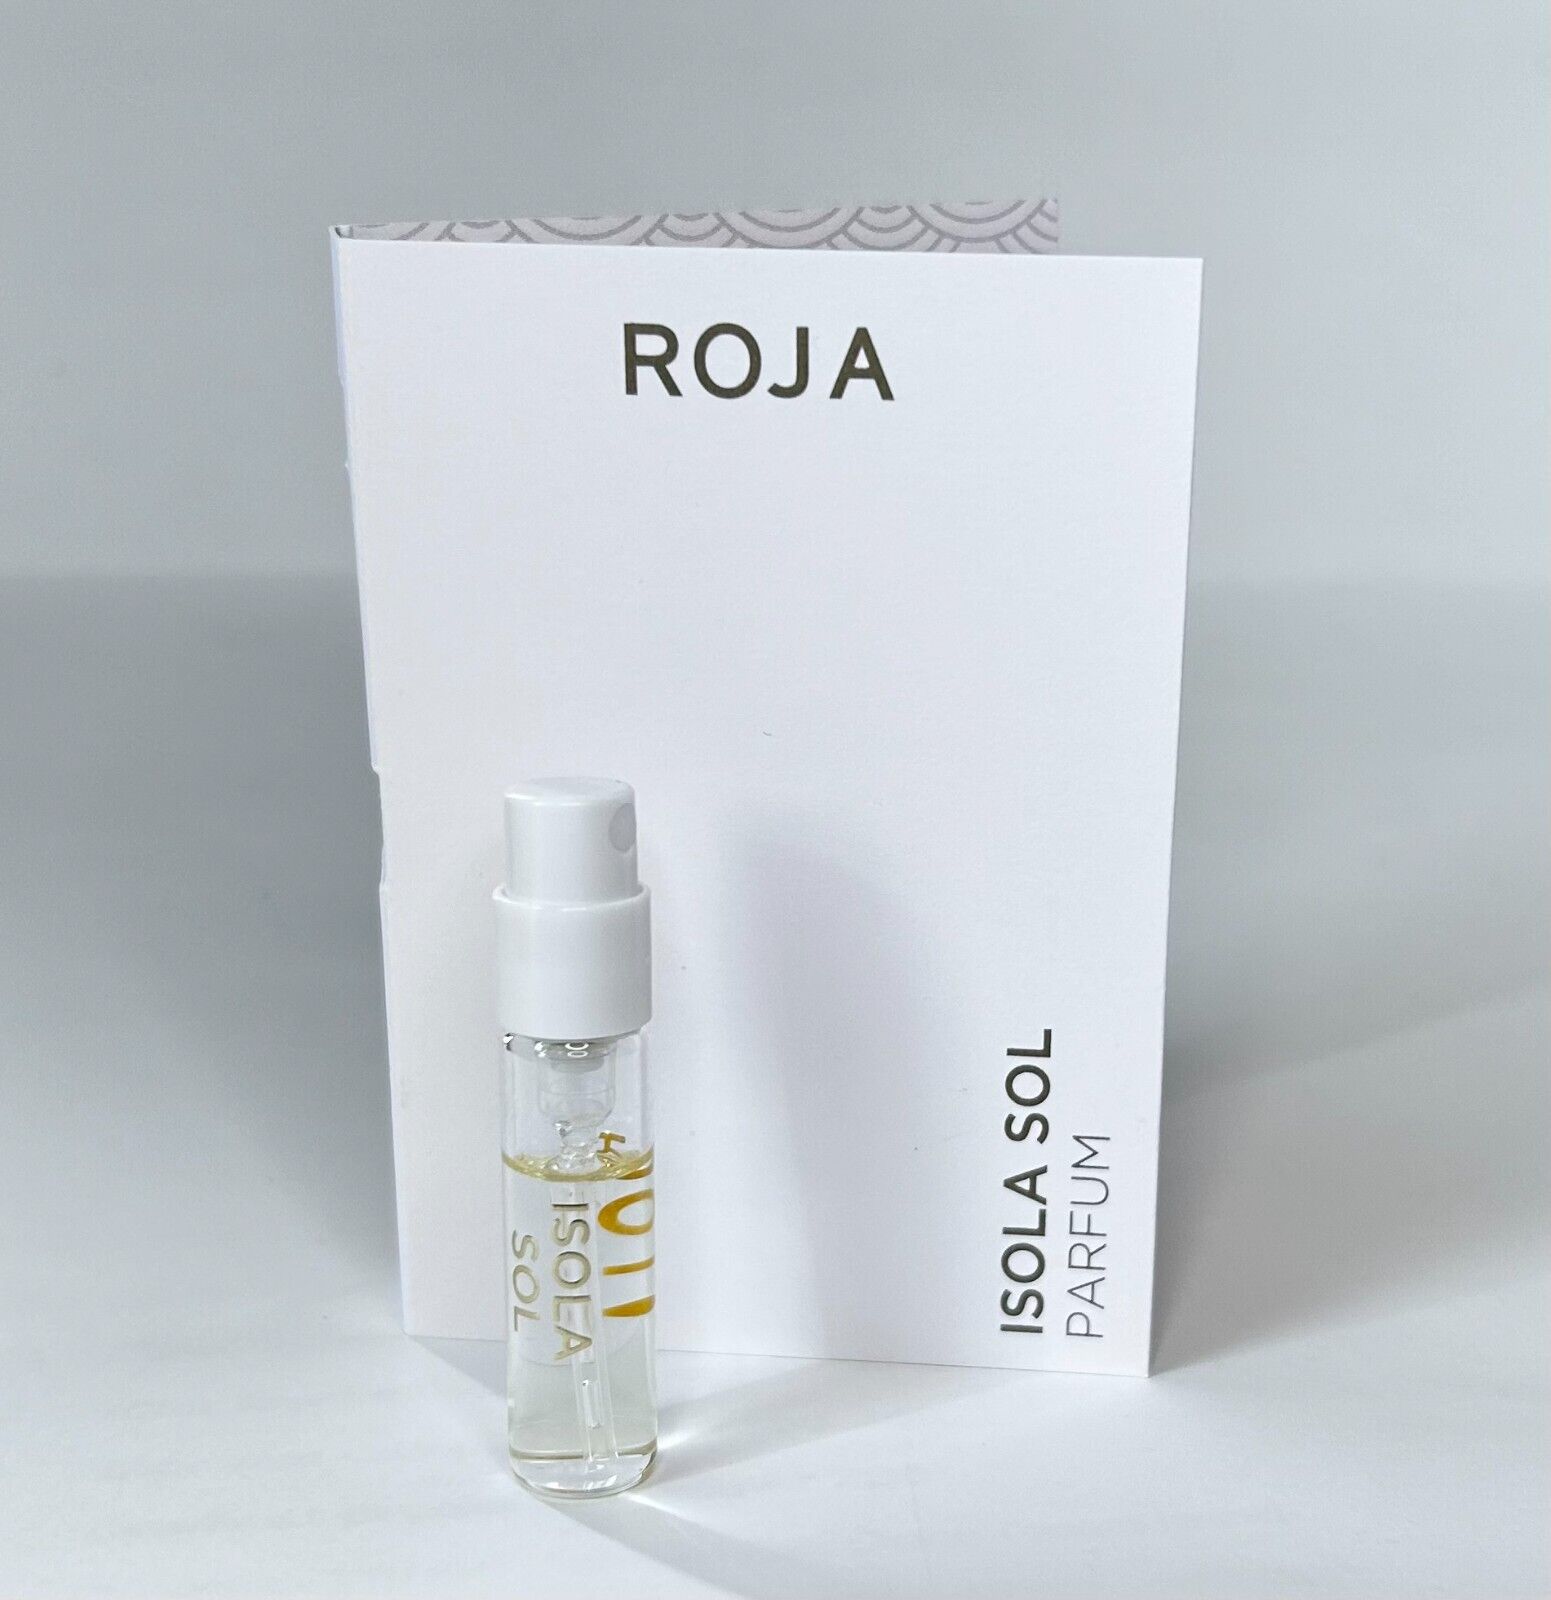 Roja ISOLA SOL Parfum Sample Vial 2ml/0.067 fl.oz New With Card